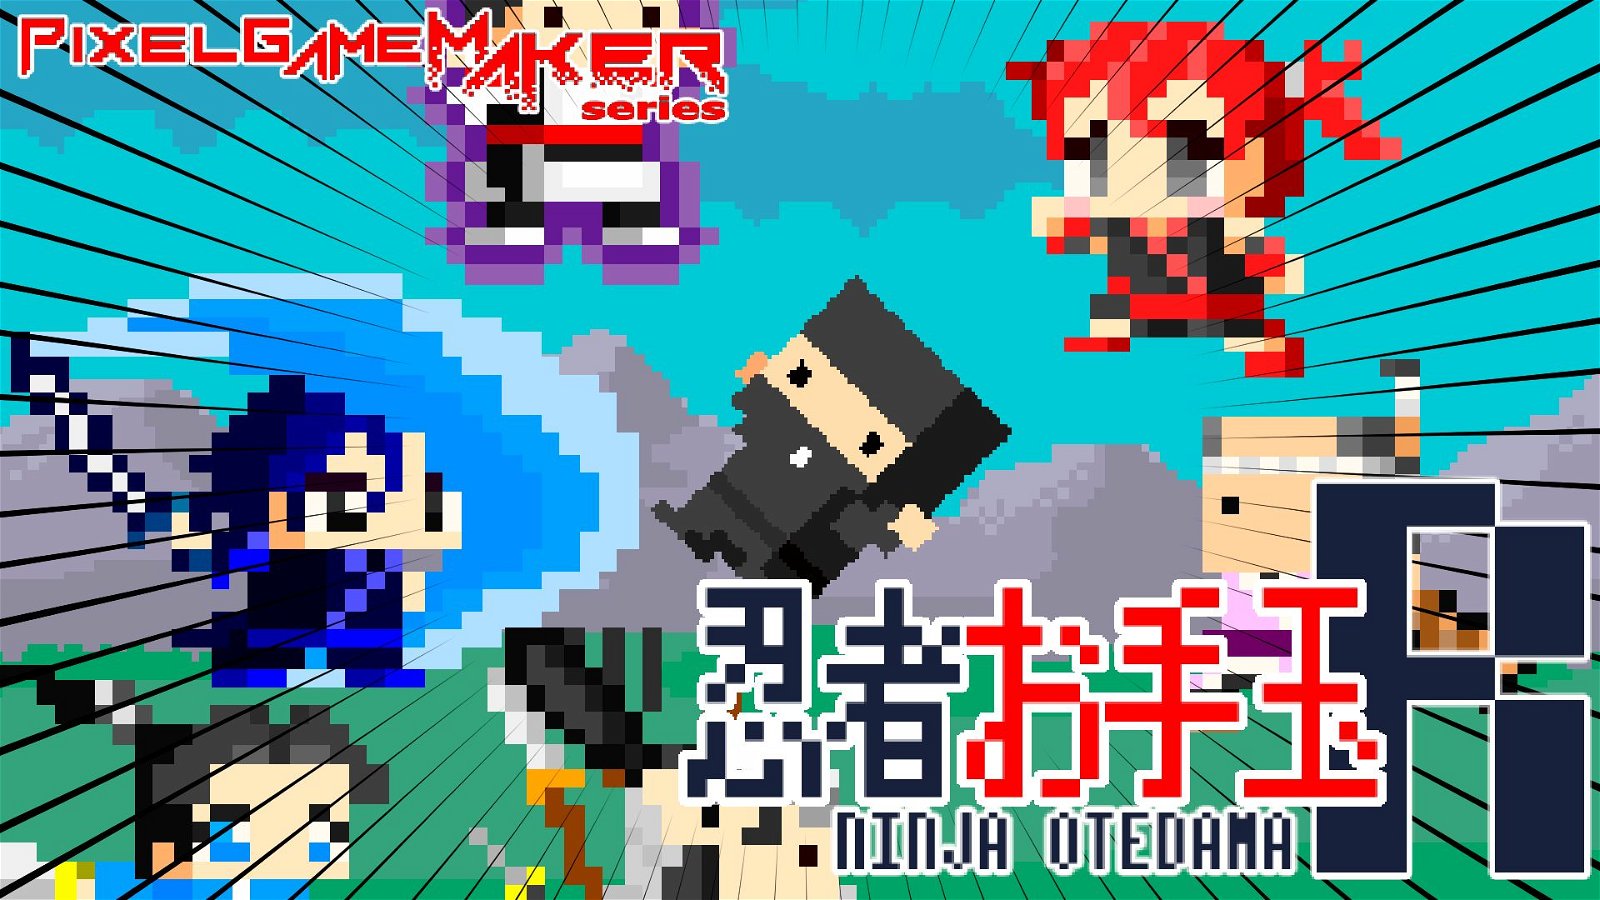 Image of Pixel Game Maker Series NINJA OTEDAMA R